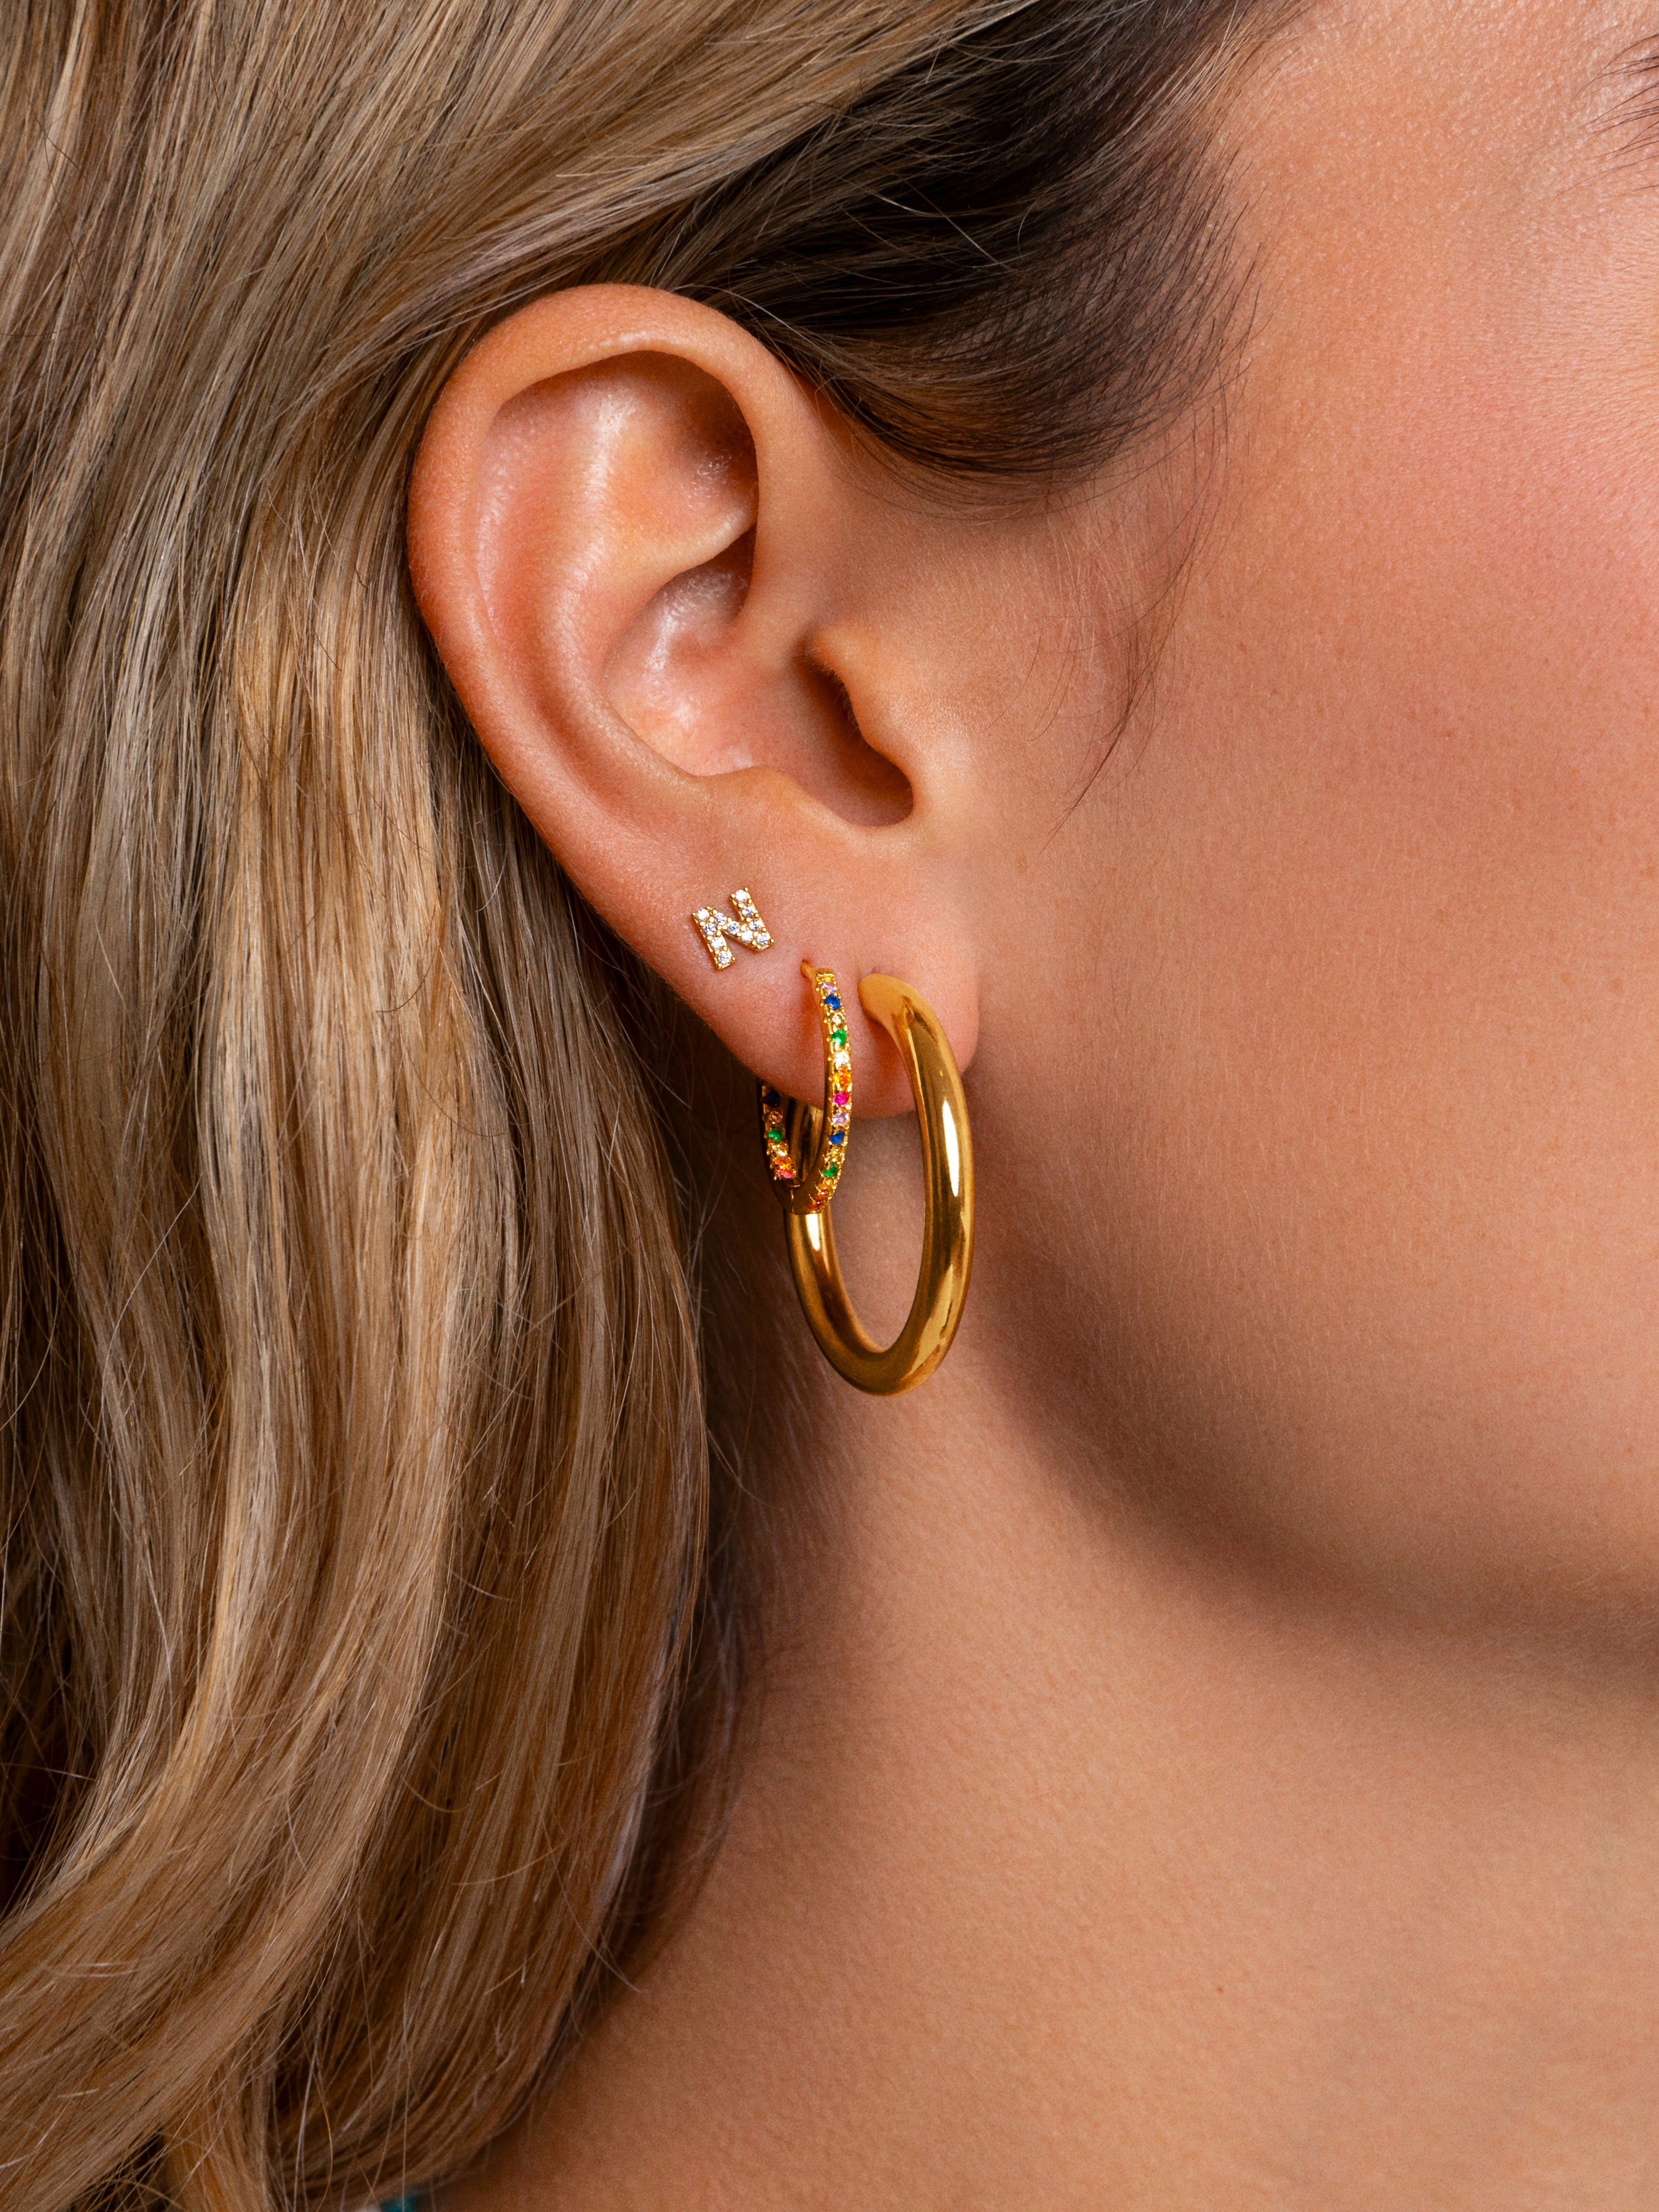 Gleam Colors Gold Earrings